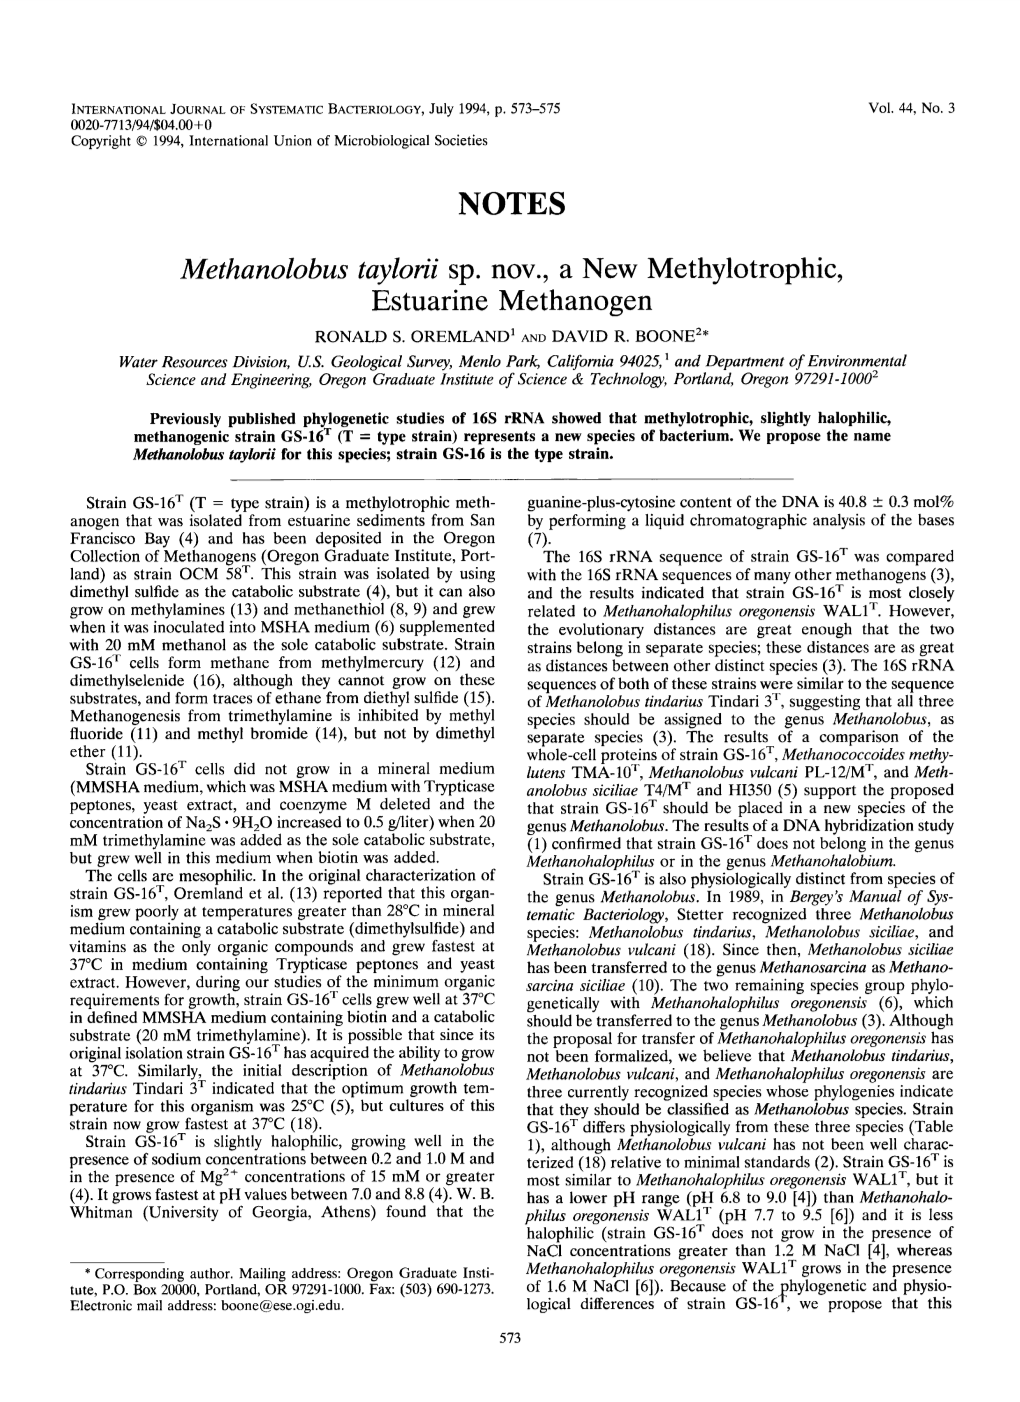 Methanolobus Taylorii Sp. Nov., a New Methylotrophic, Estuarine Methanogen